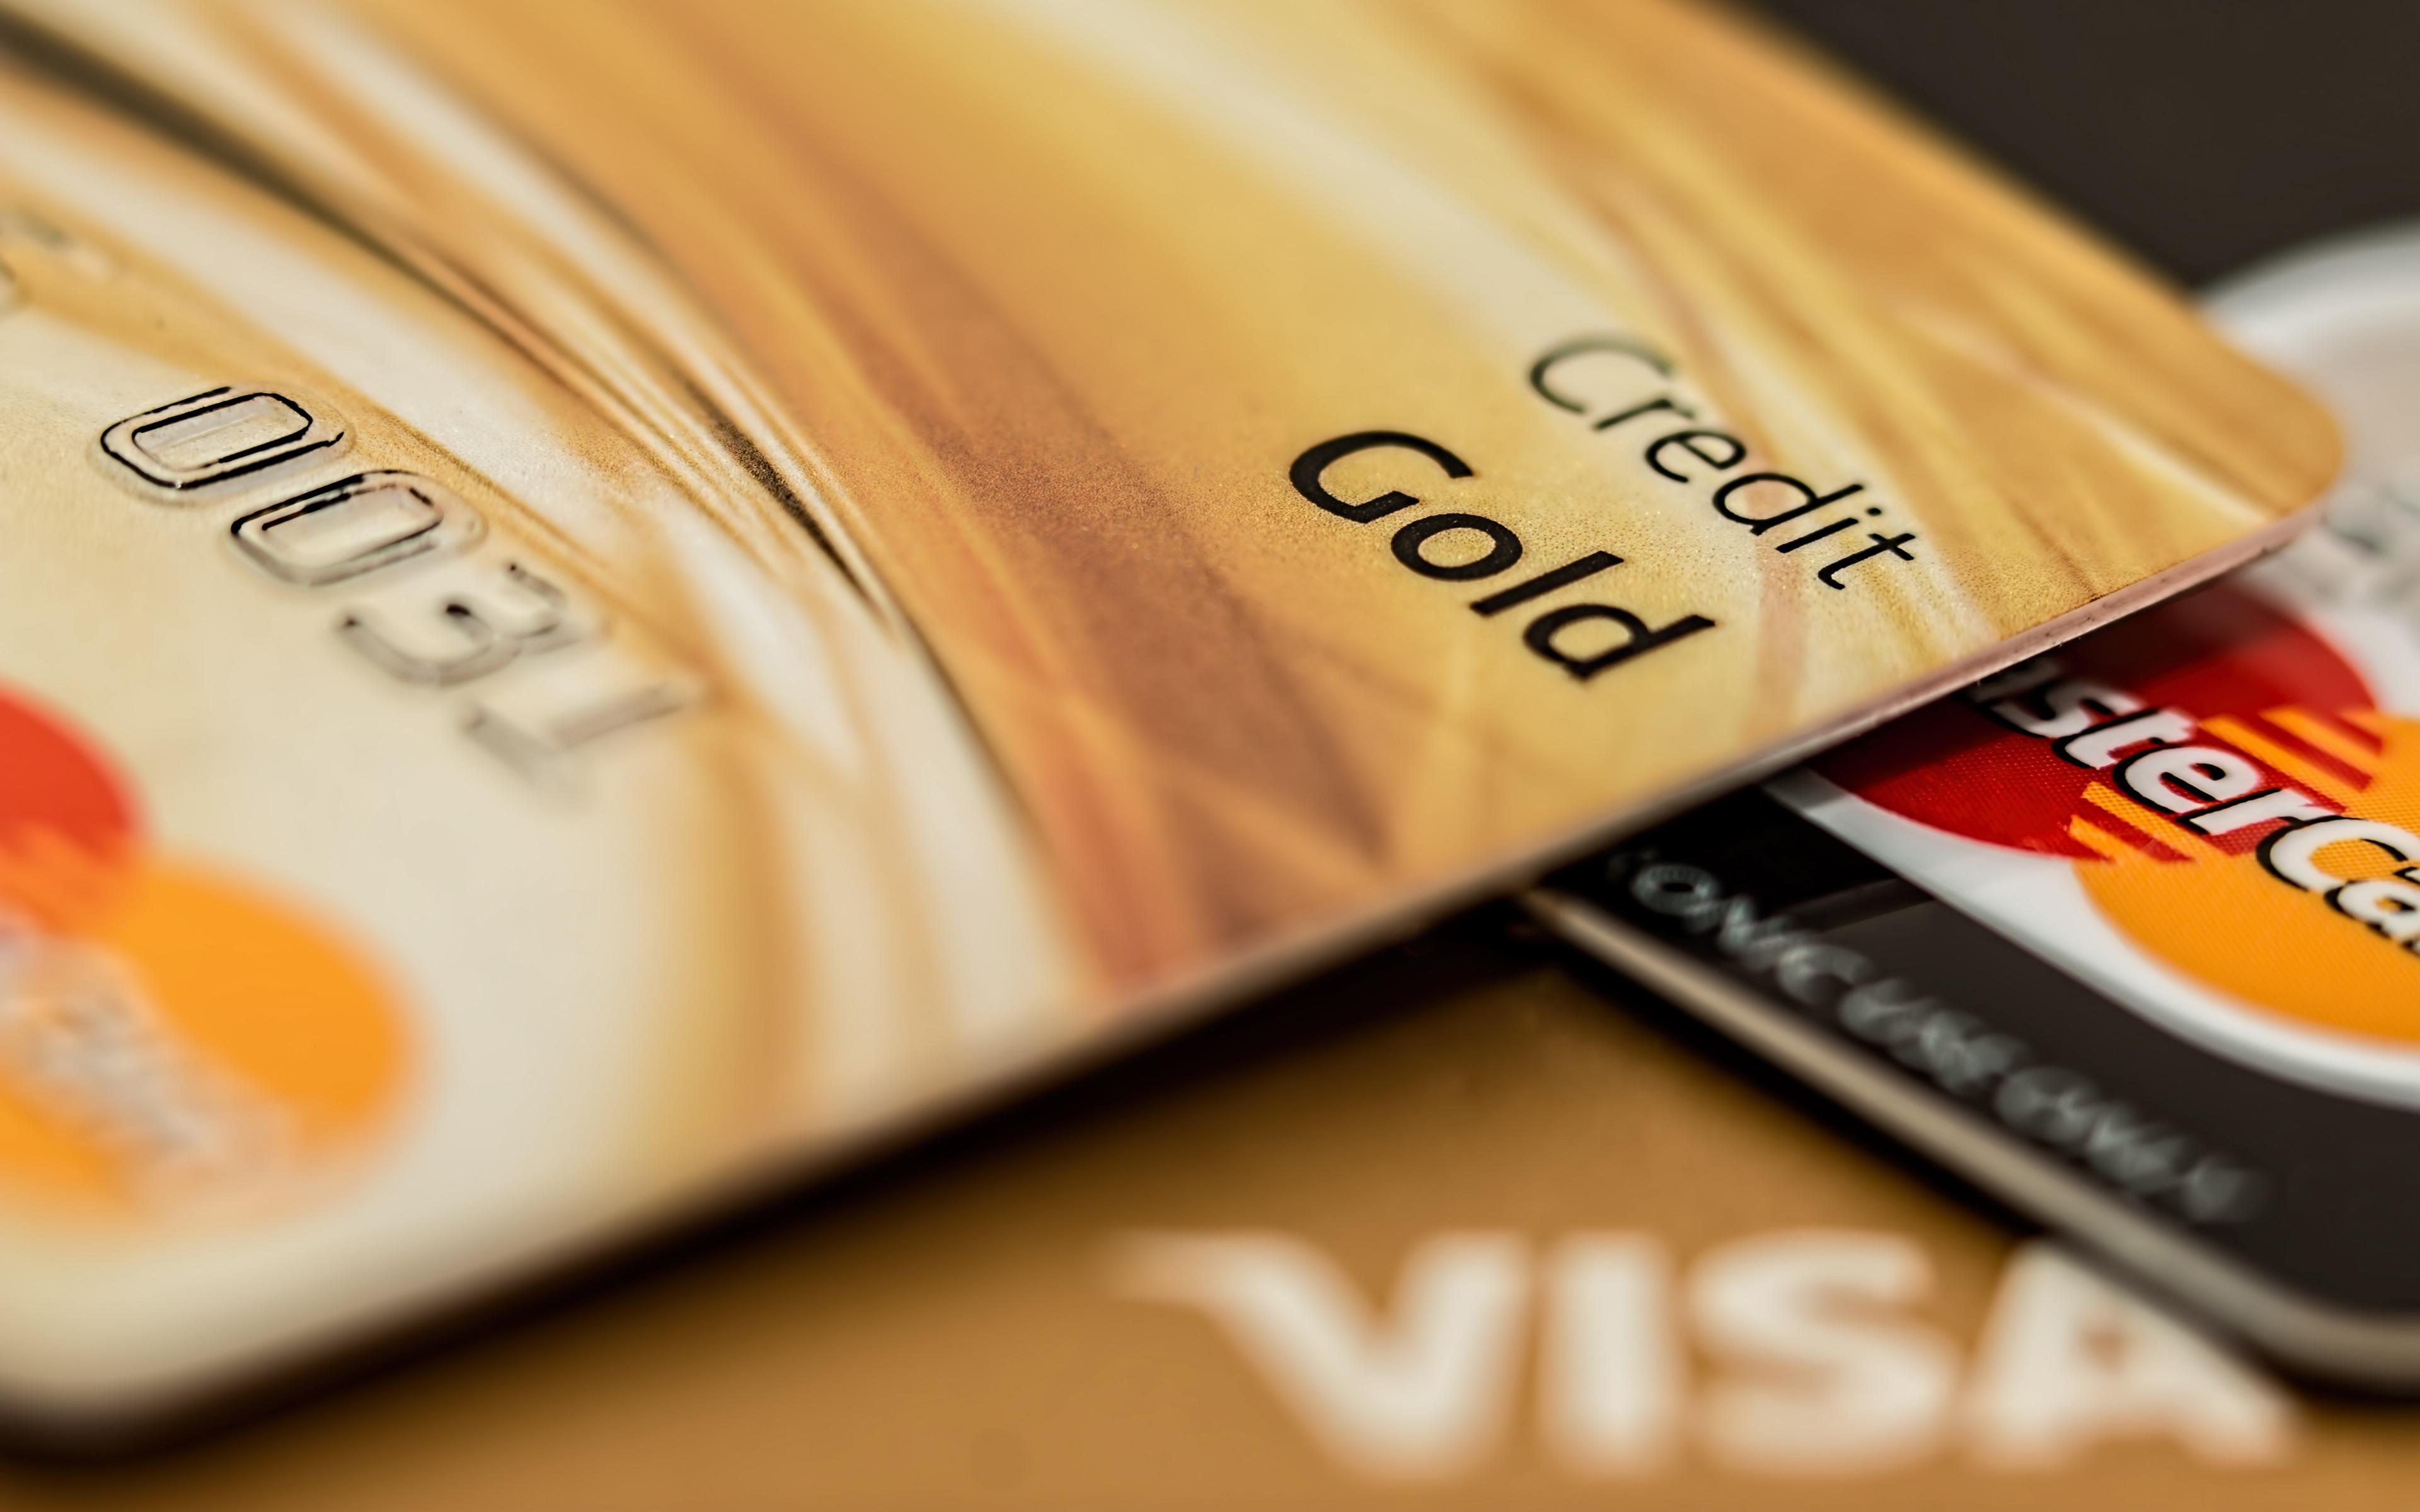 Download wallpapers credit cards, 4k, VISA, bank, close